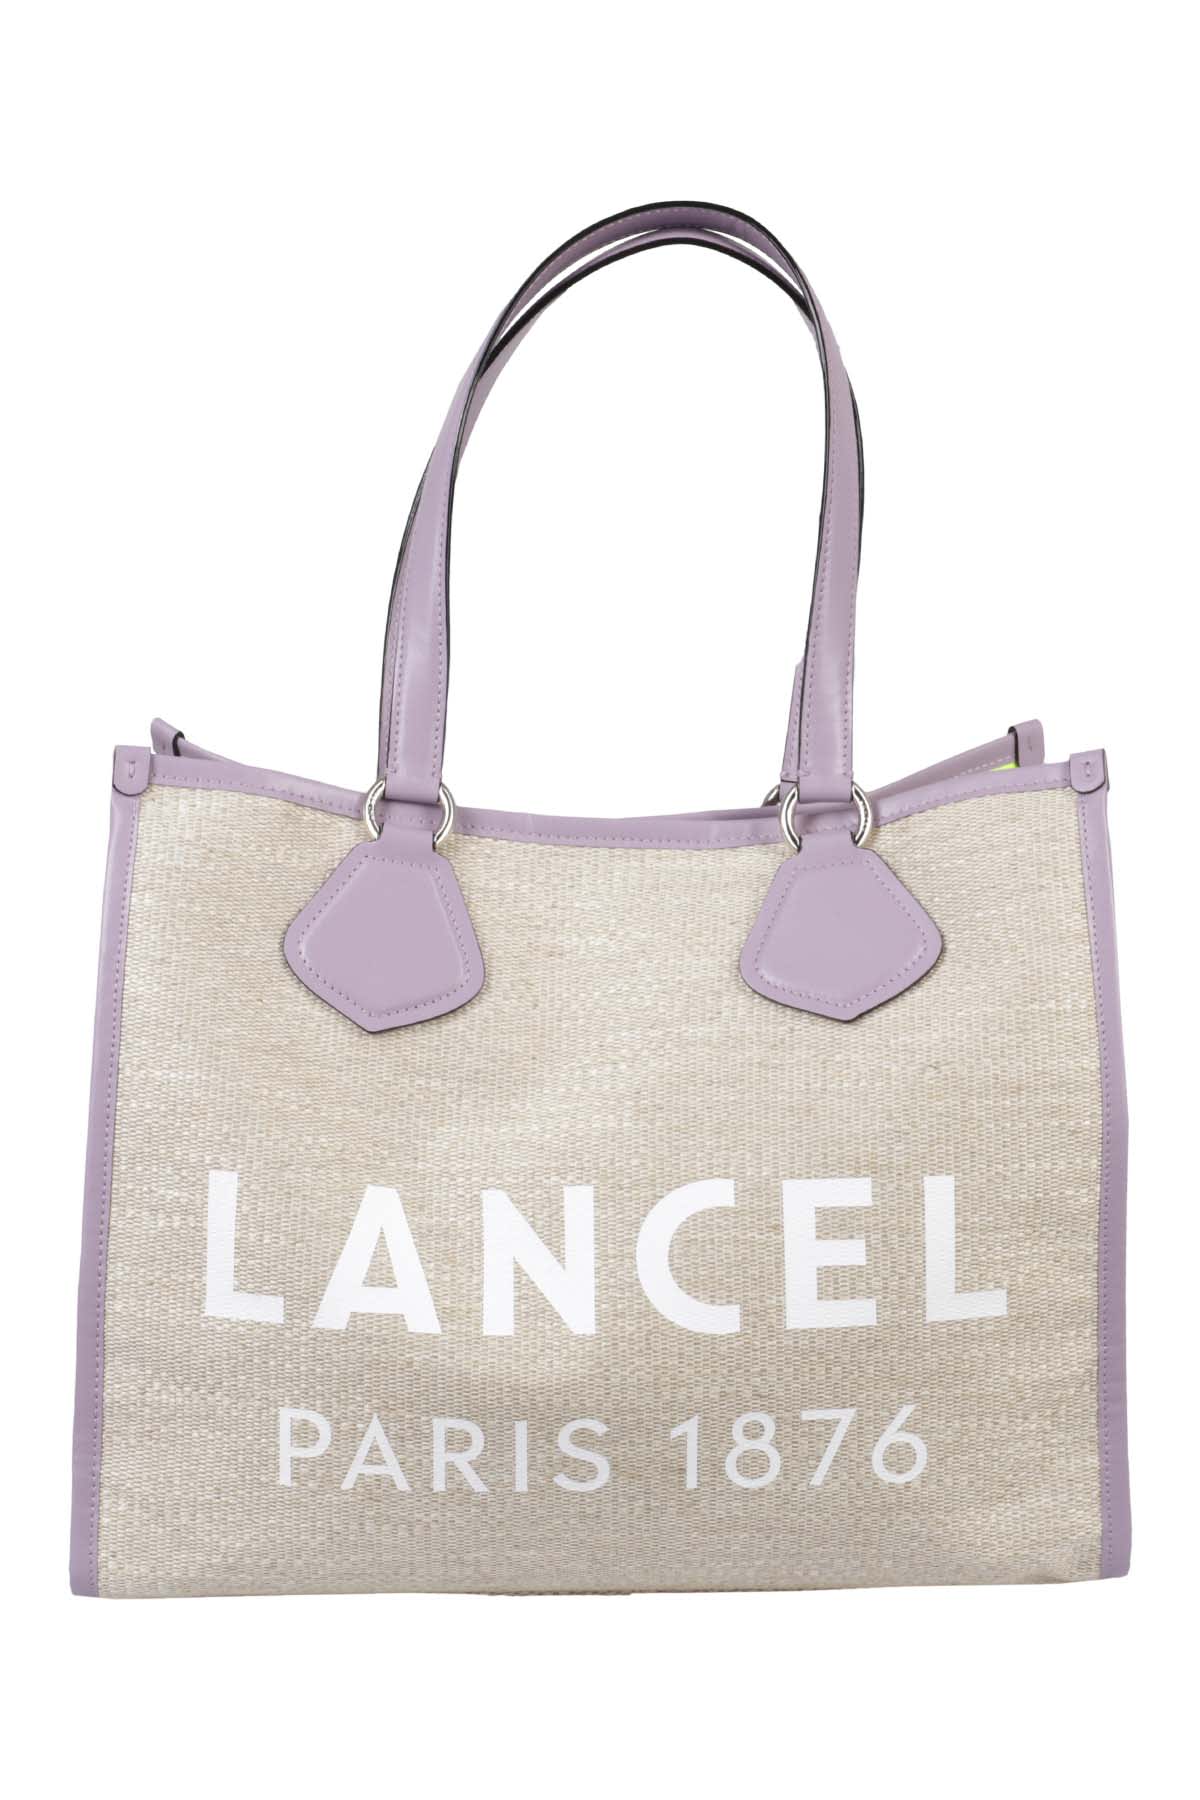 Lancel Luggage